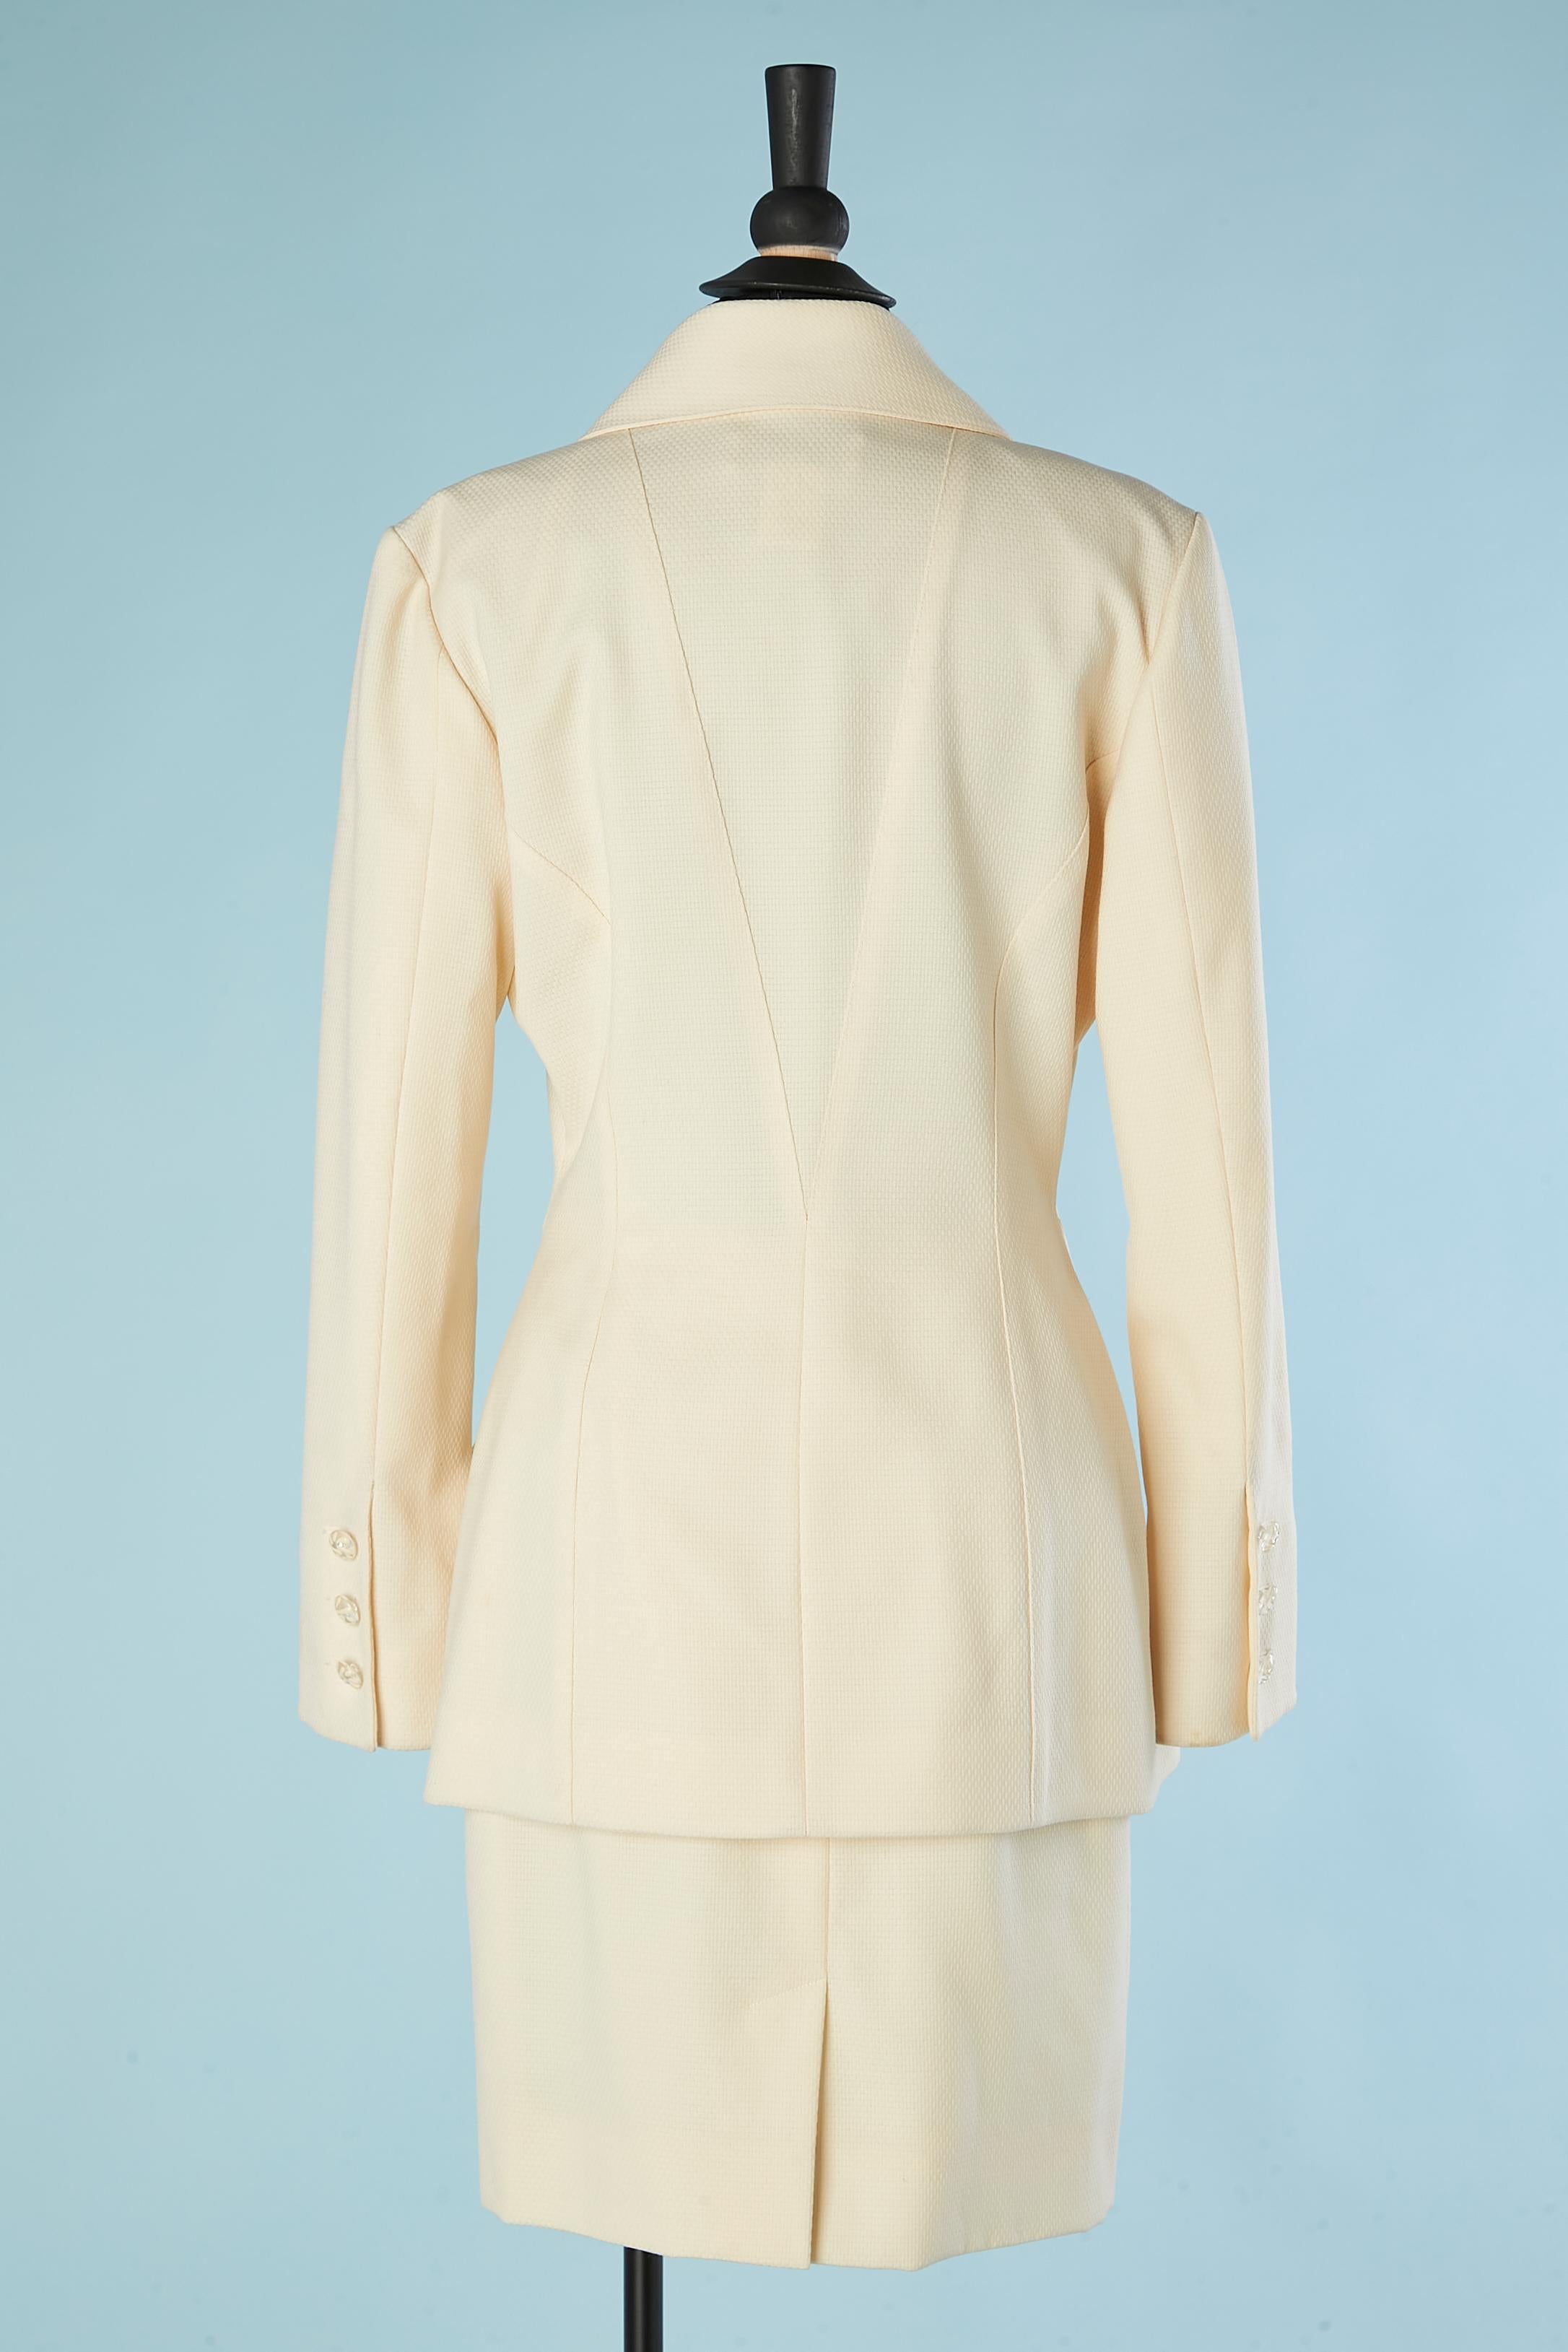 Women's Ivory wool skirt-suit Karl Lagerfeld for Nieman Marcus 